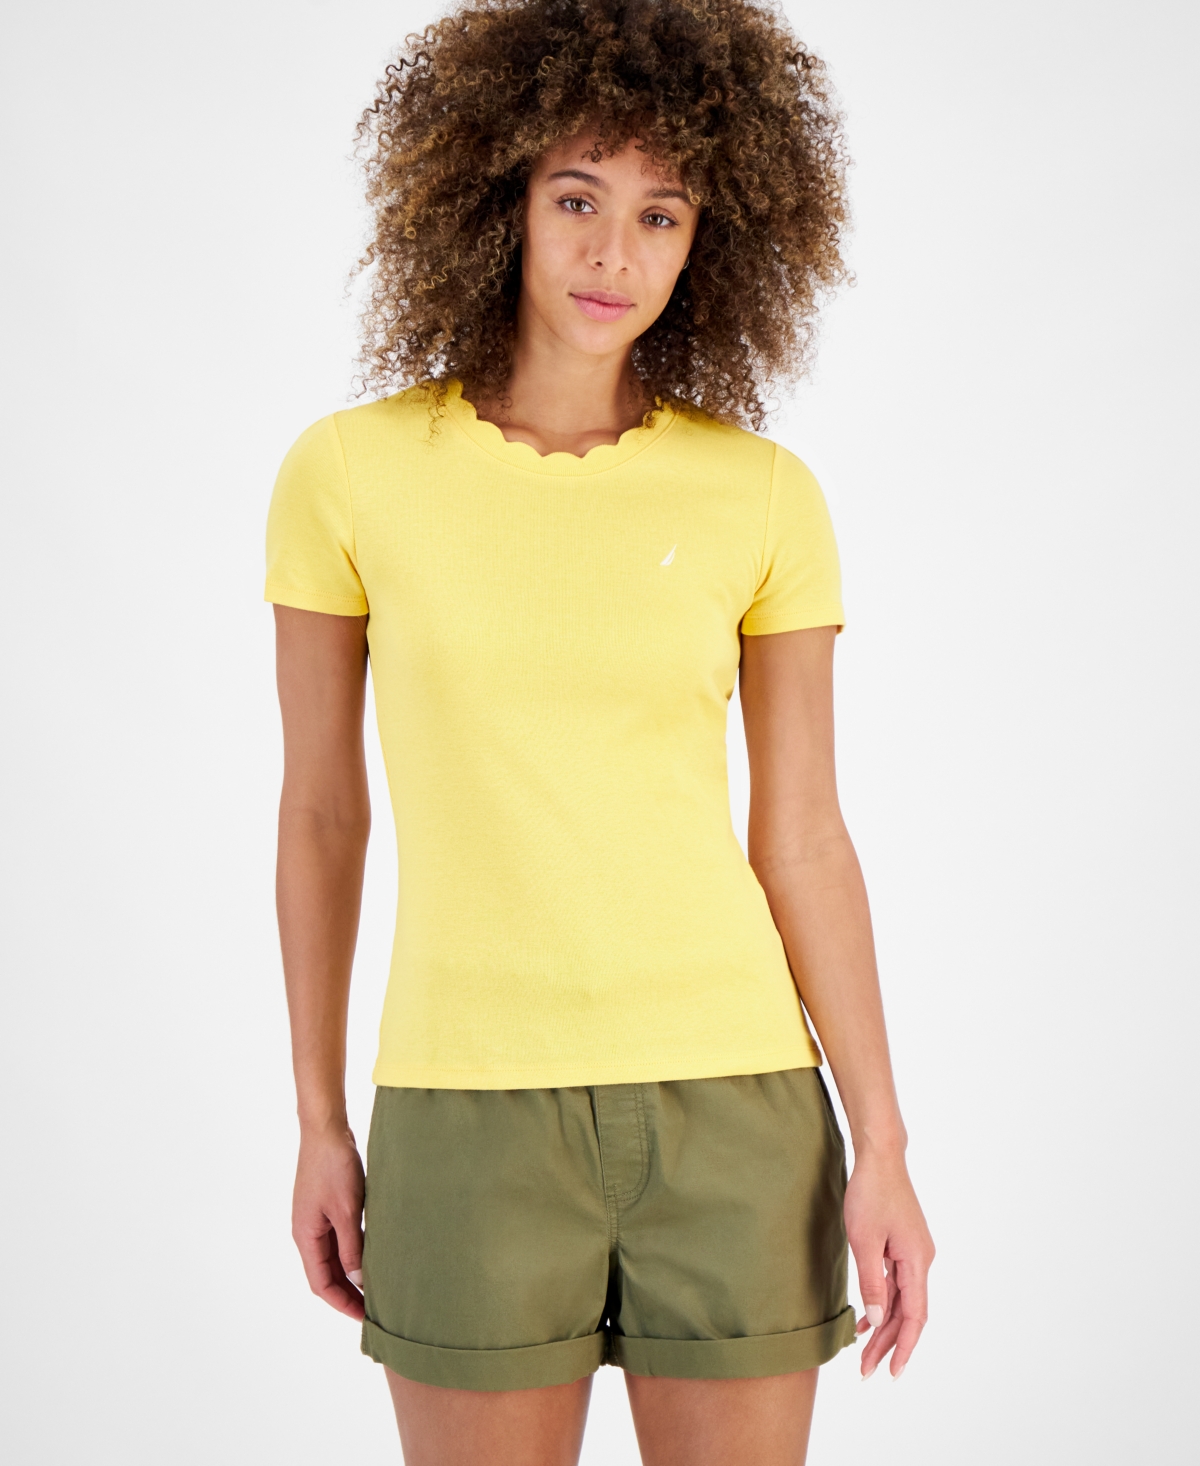 Women's Cotton Scalloped Crewneck T-Shirt - Daffodil